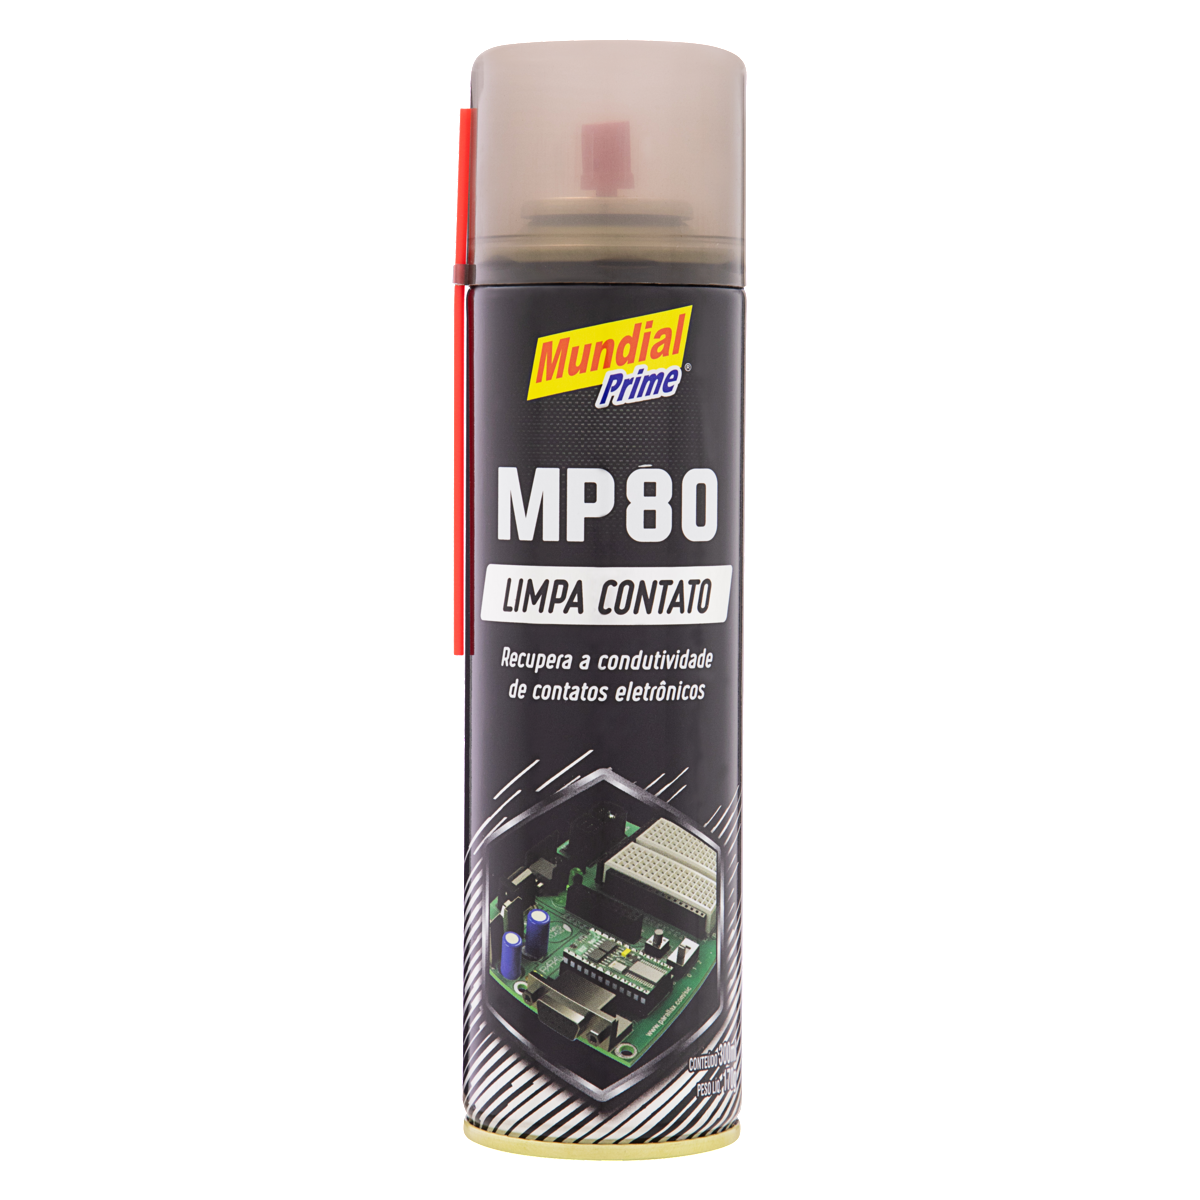 7898907527774 - LIMPA-CONTATO SPRAY MUNDIAL PRIME MP80 FRASCO 300ML